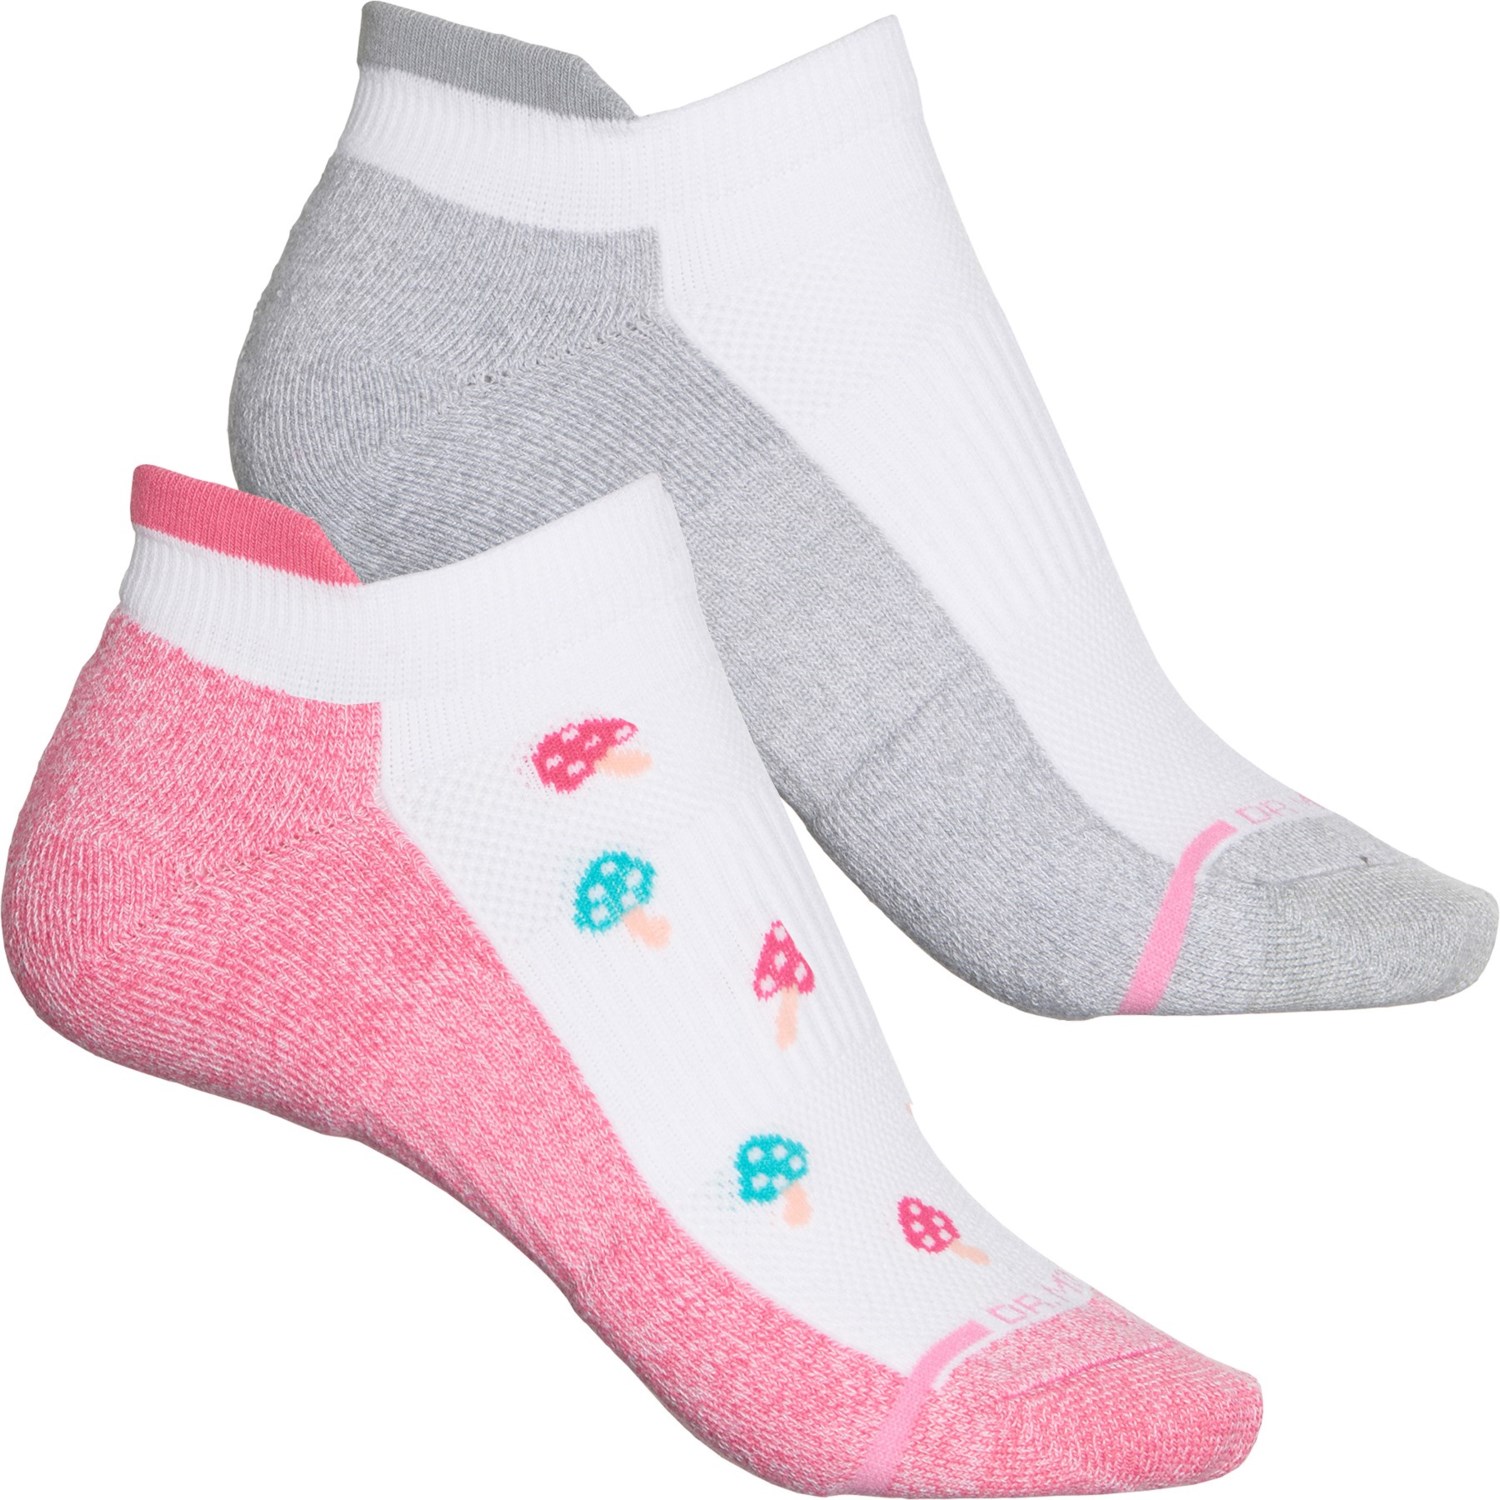 DR MOTION Mushroom Everyday Compression Socks (For Women) - Save 33%